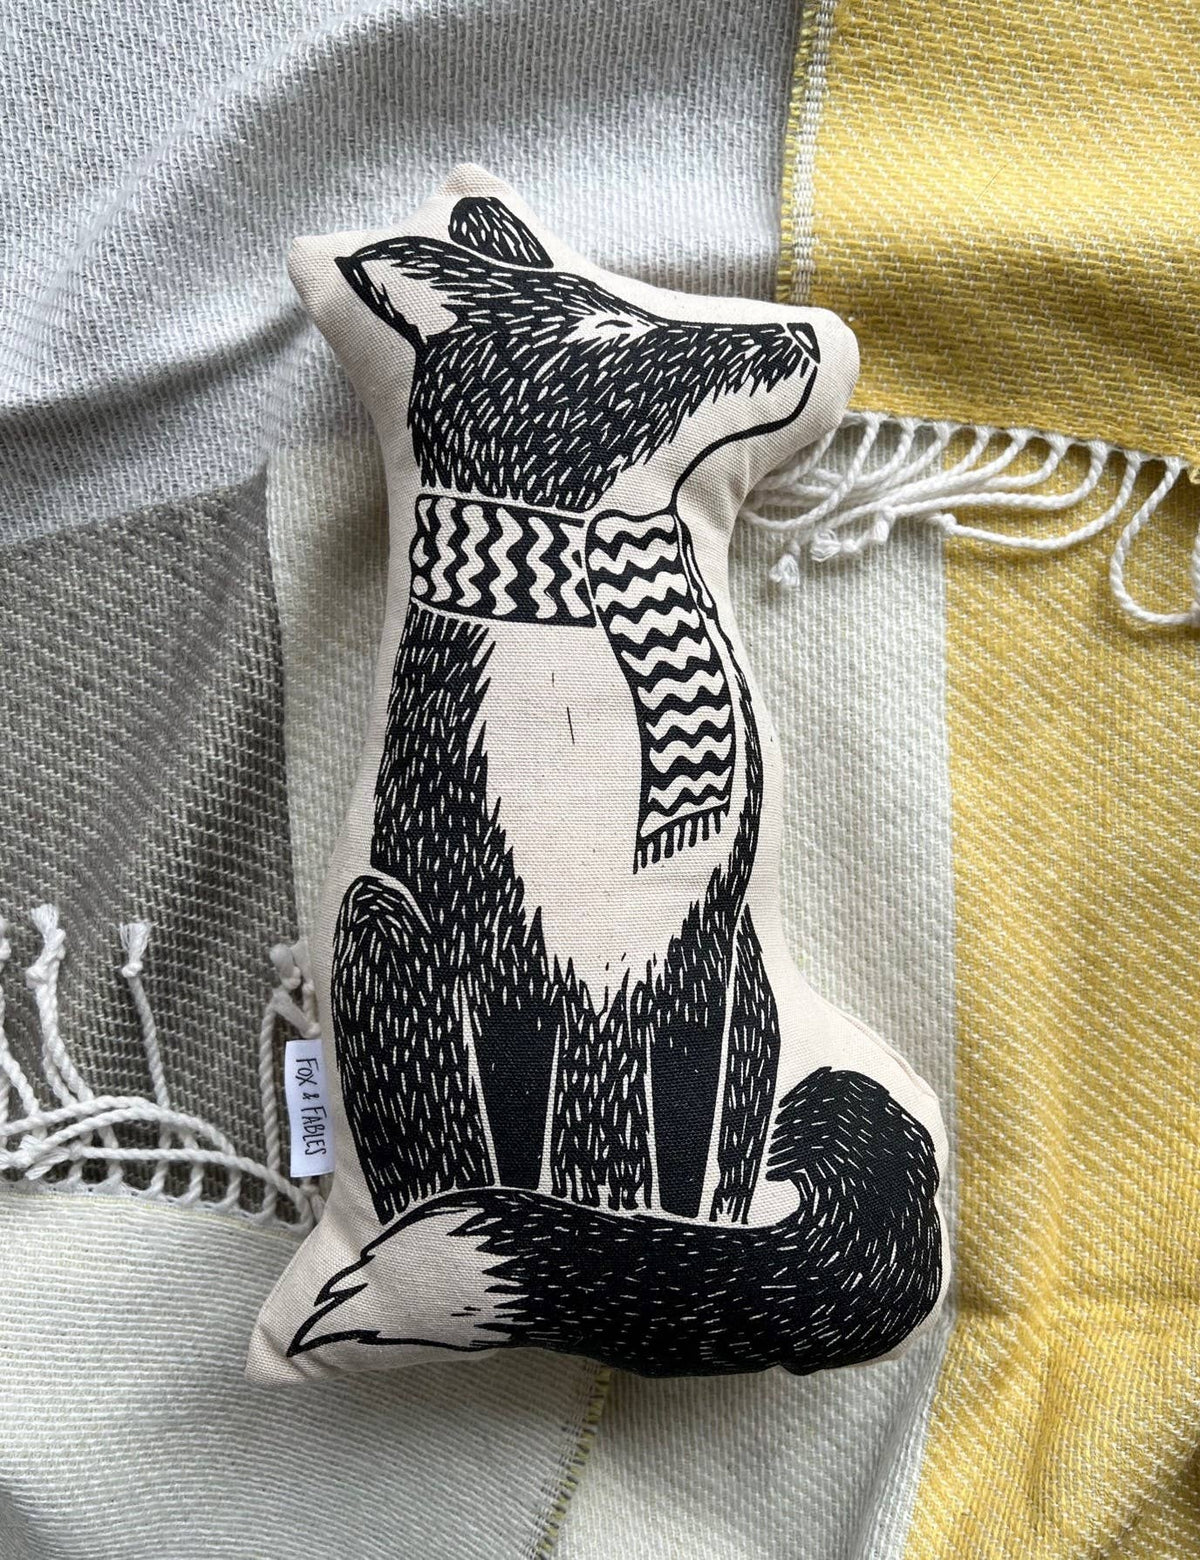 Printed Pillows - Woodland Animals: Bear